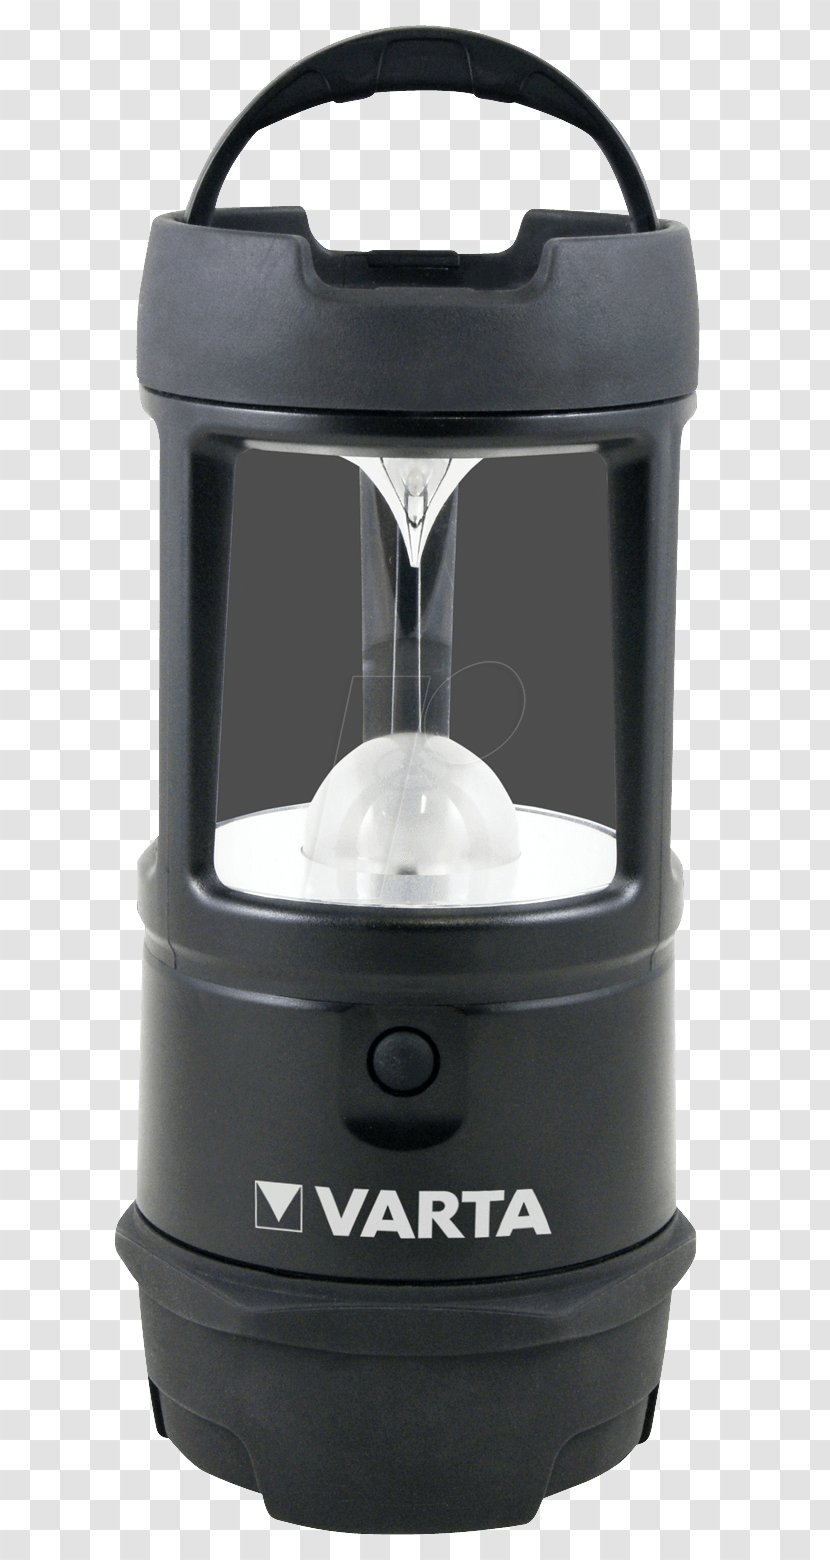 Flashlight Lantern Varta Indestructible 1 W 3 LED Torch Battery-powered Lm - Cr 2032 - Light Transparent PNG